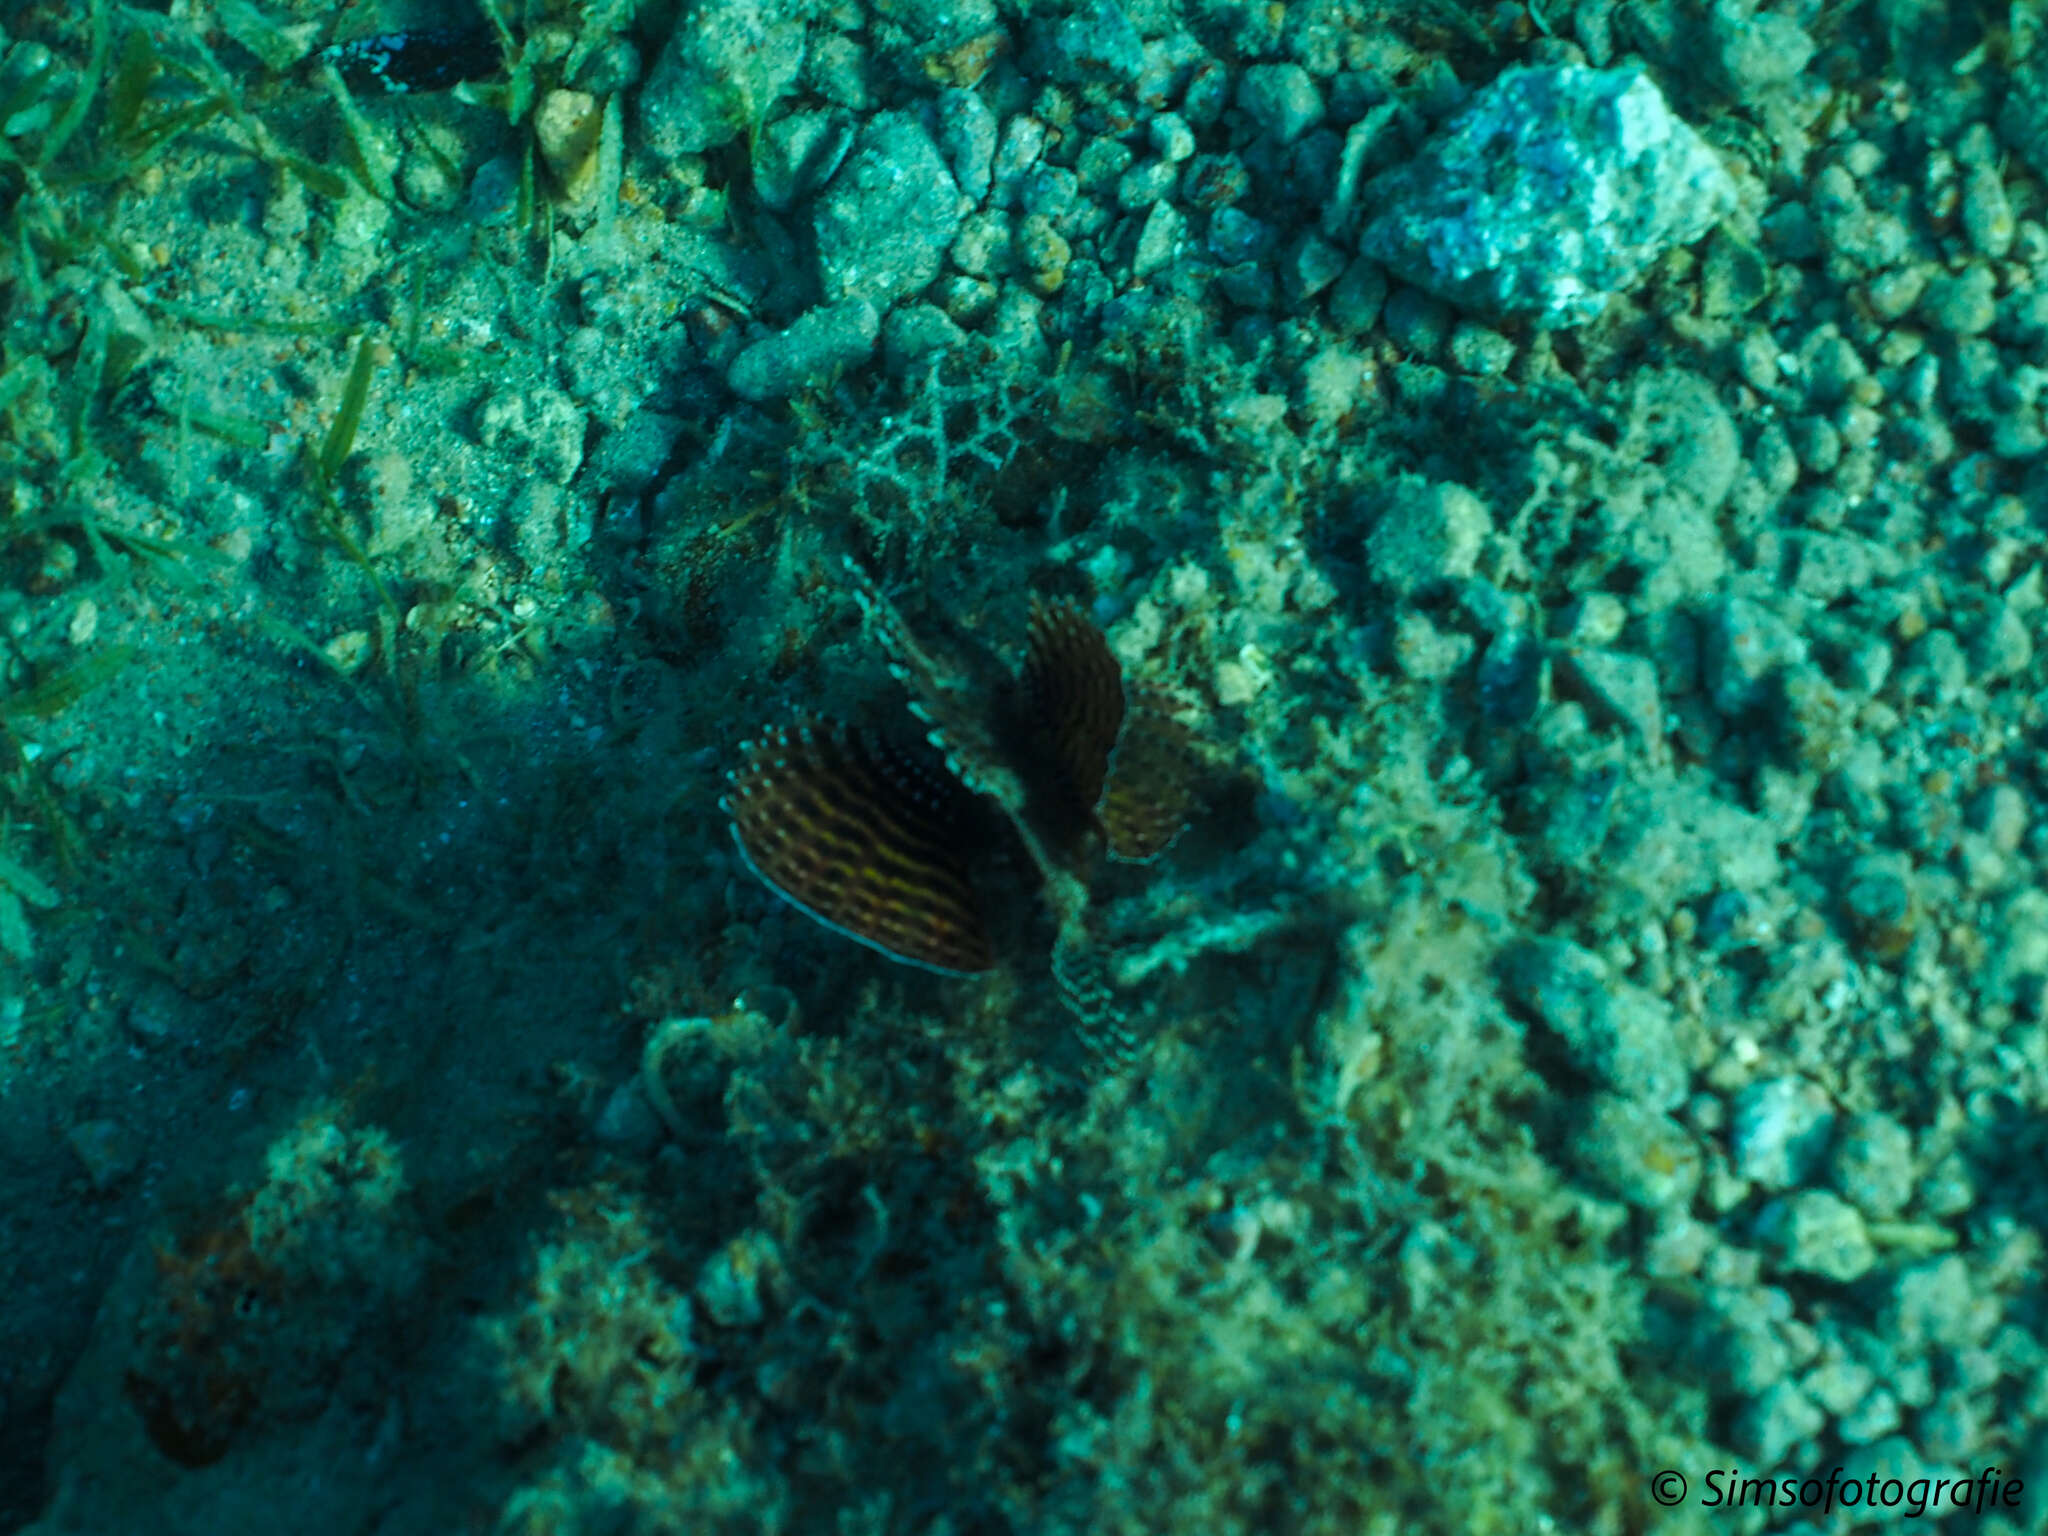 Image of Red Sea dwarf lionfish